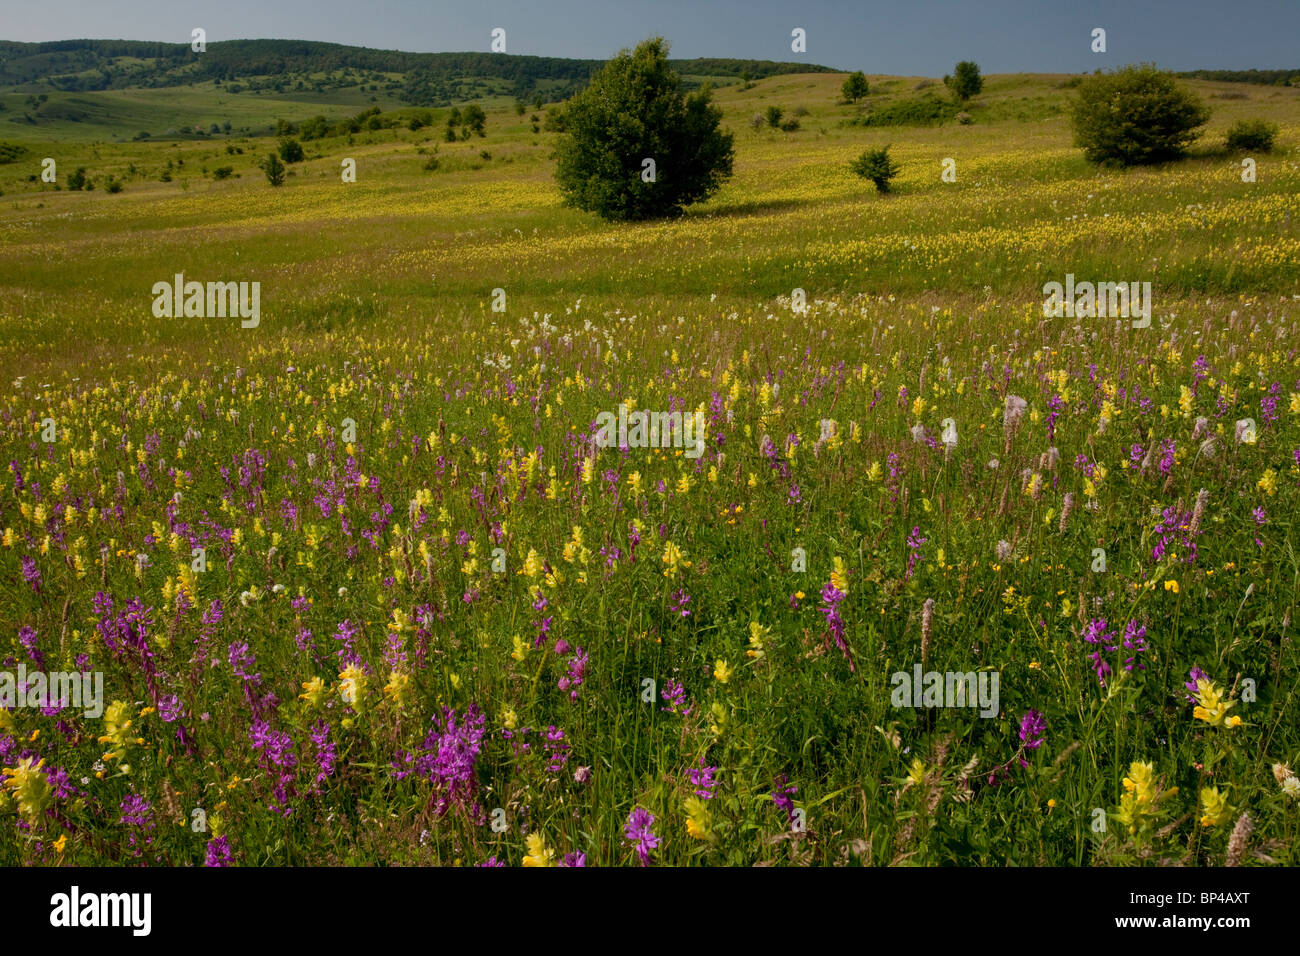 Extensas praderas floridas intensamente alrededor de la aldea de Viscri sajones de Transilvania, Rumania. Foto de stock